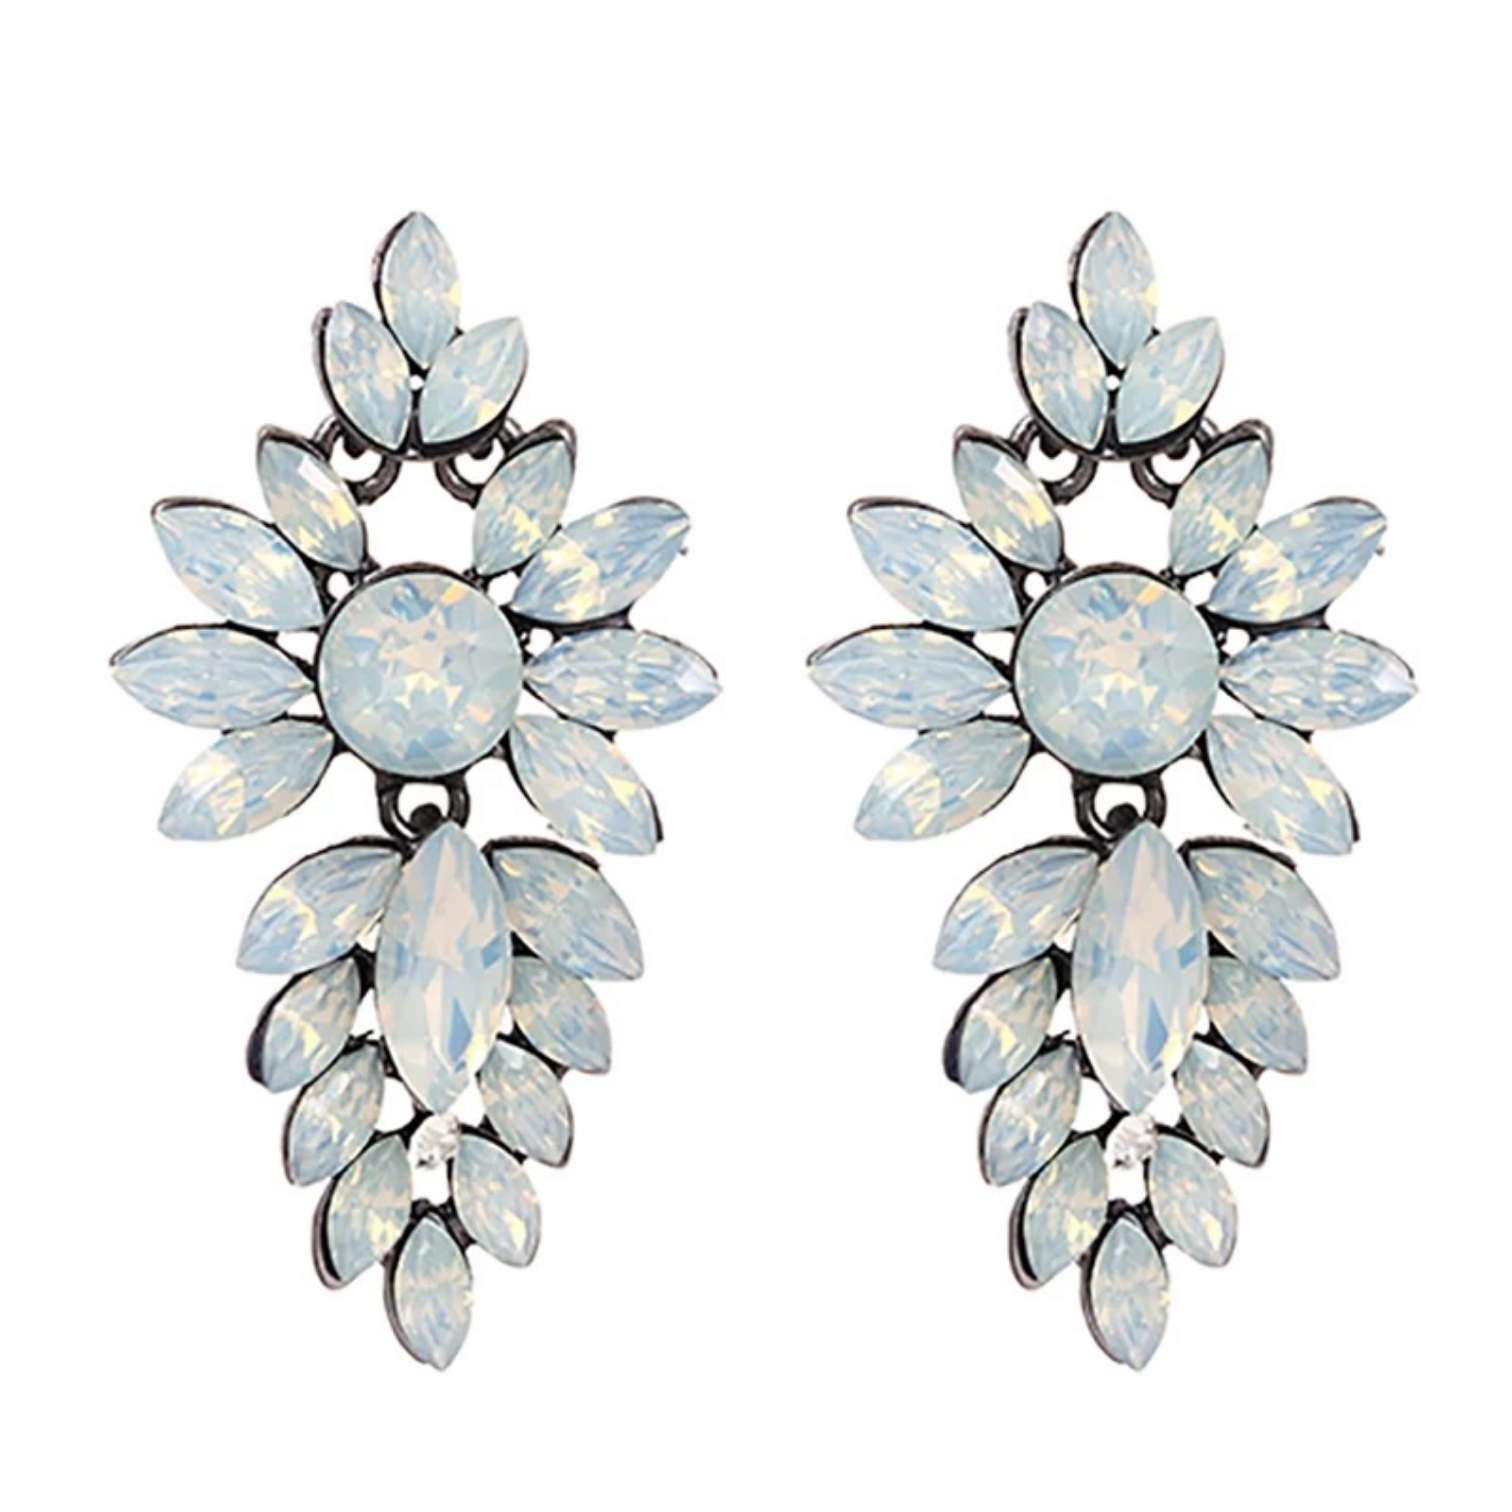 White Opal Rhinestone Earrings Set in VIntage Silver Alloy in Floral Drop Design